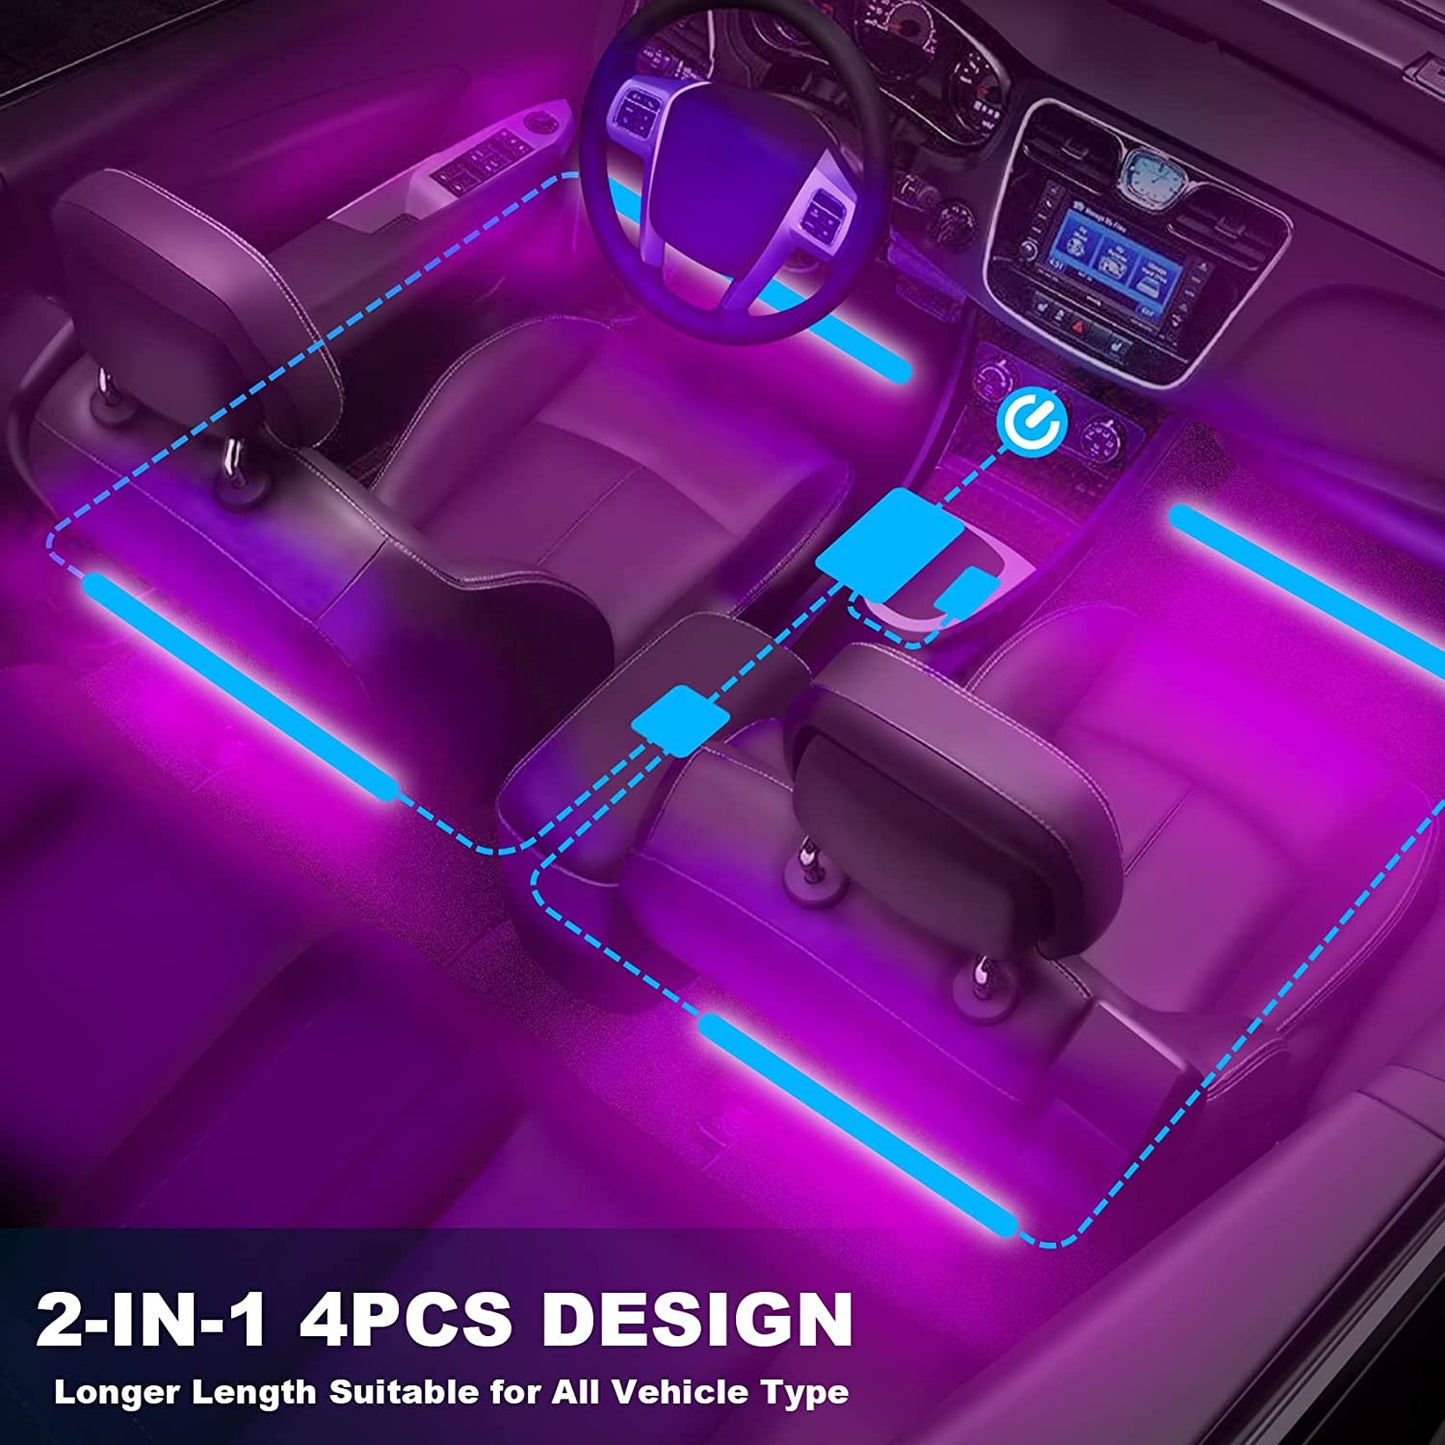 12V DC Car LED Interior Lights 2-in-1 Design 4pcs 48 LED Remote and APP Controller, Waterproof